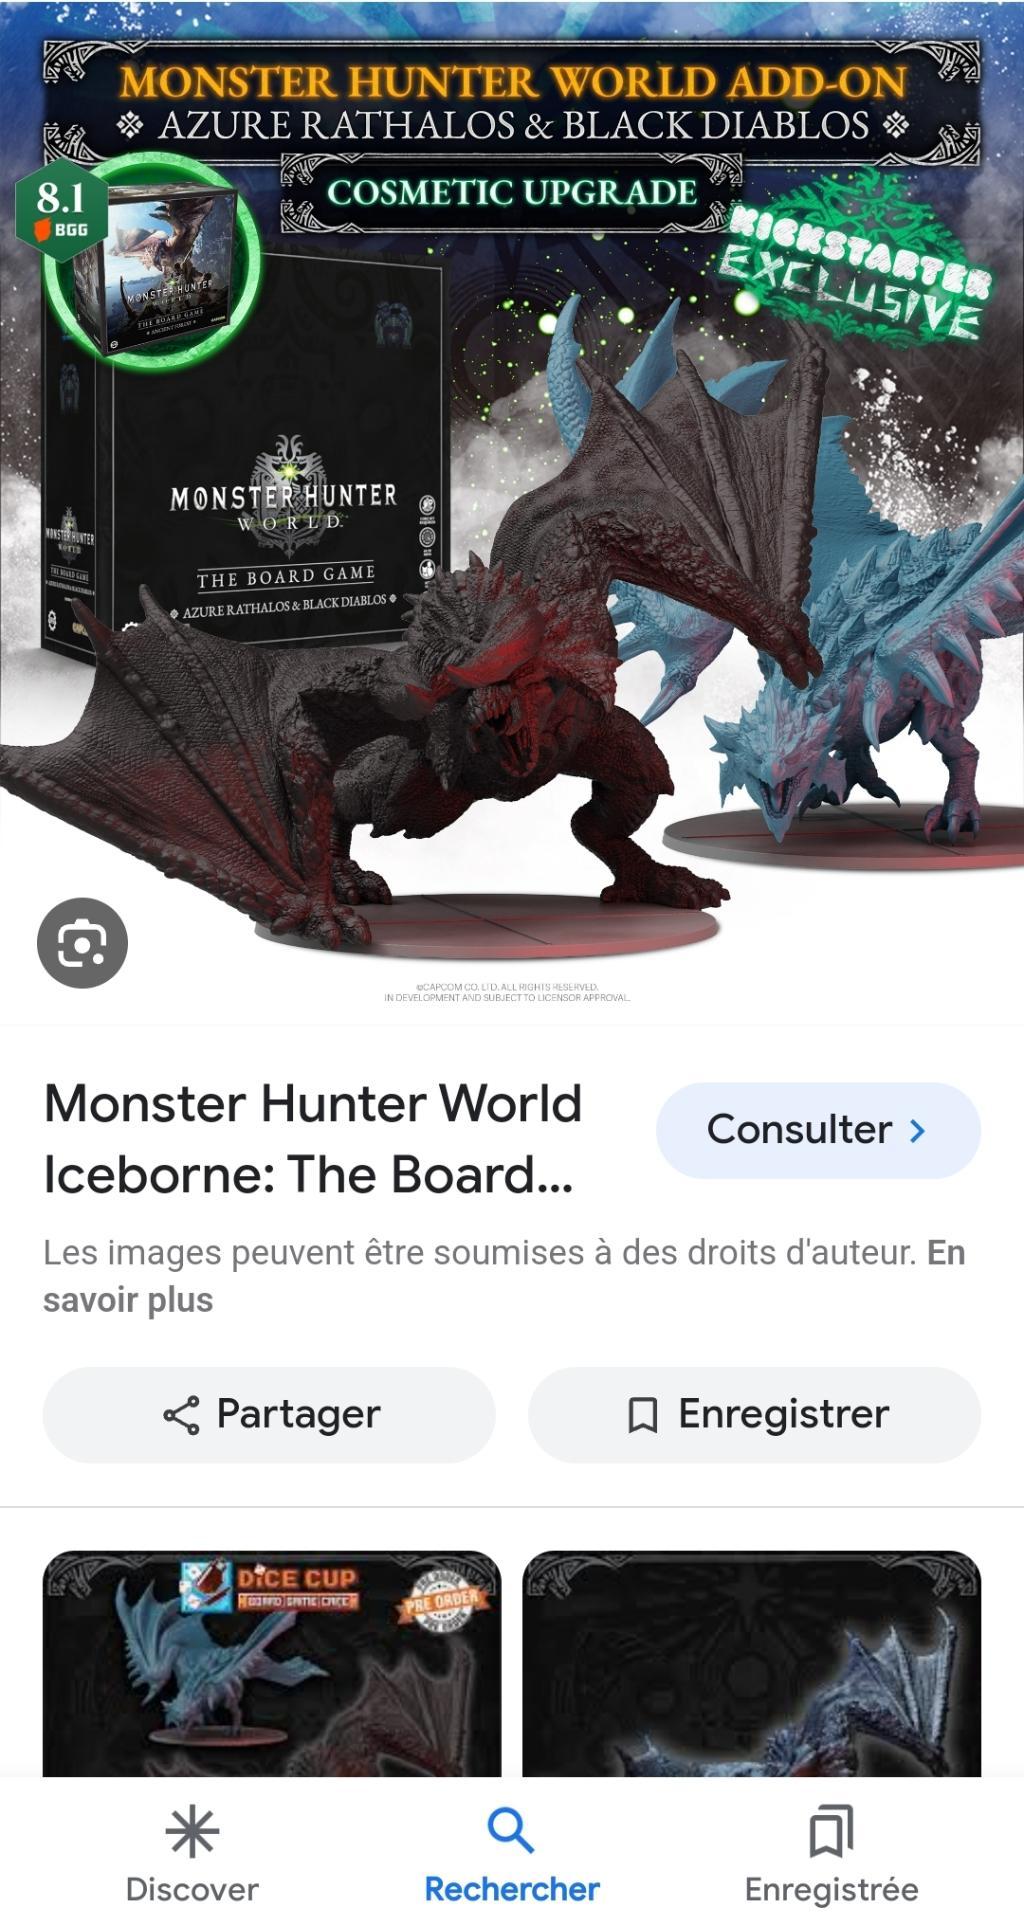 Monster Hunter World - Azure Rathalos & Black Diablos